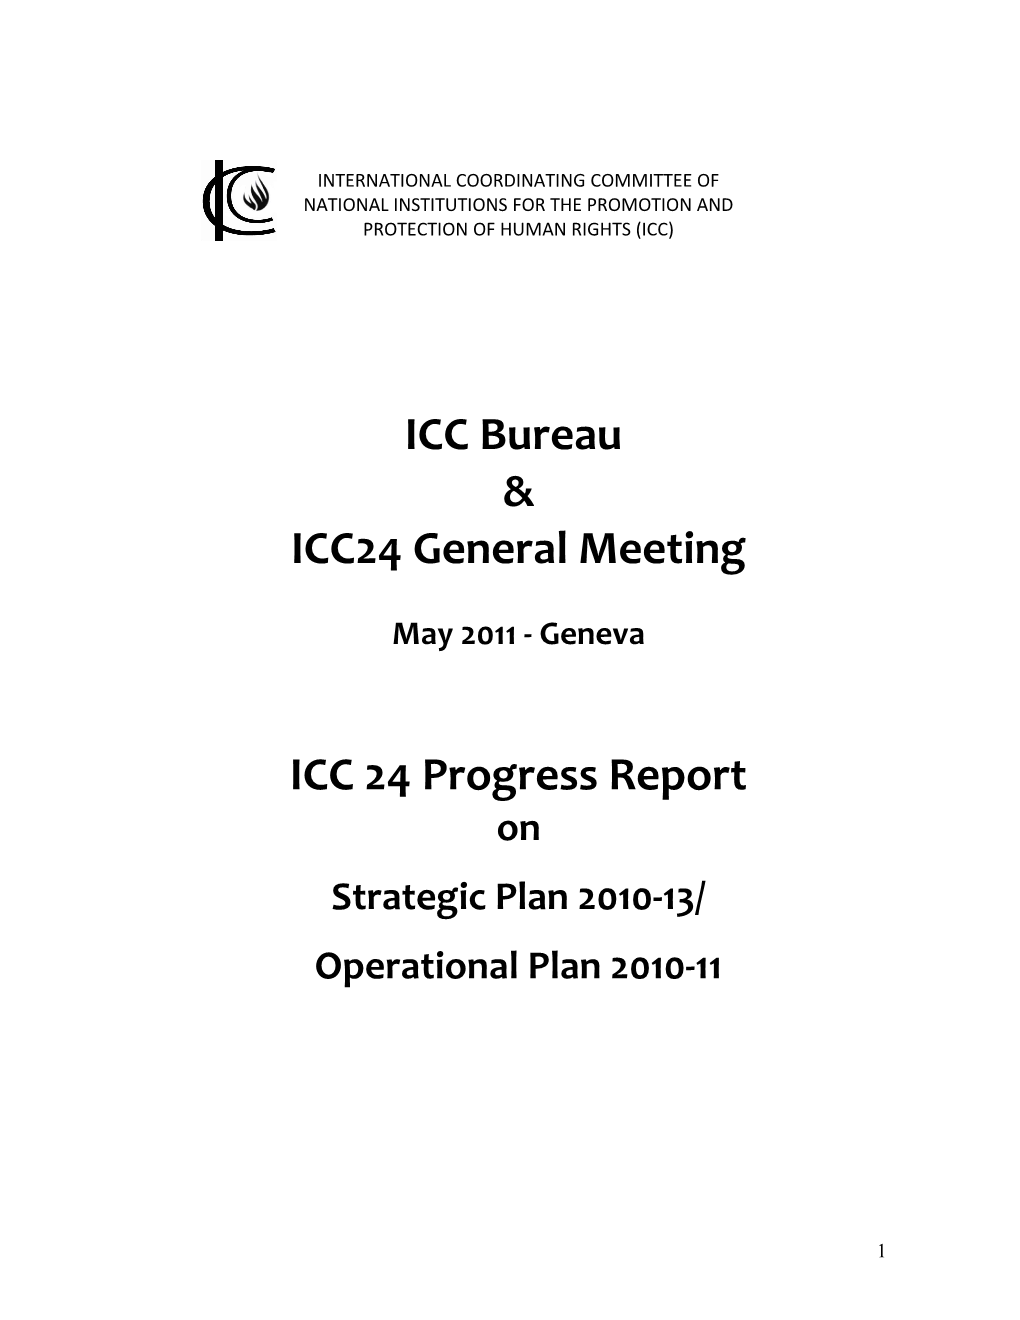 ICC 24 Progress Report